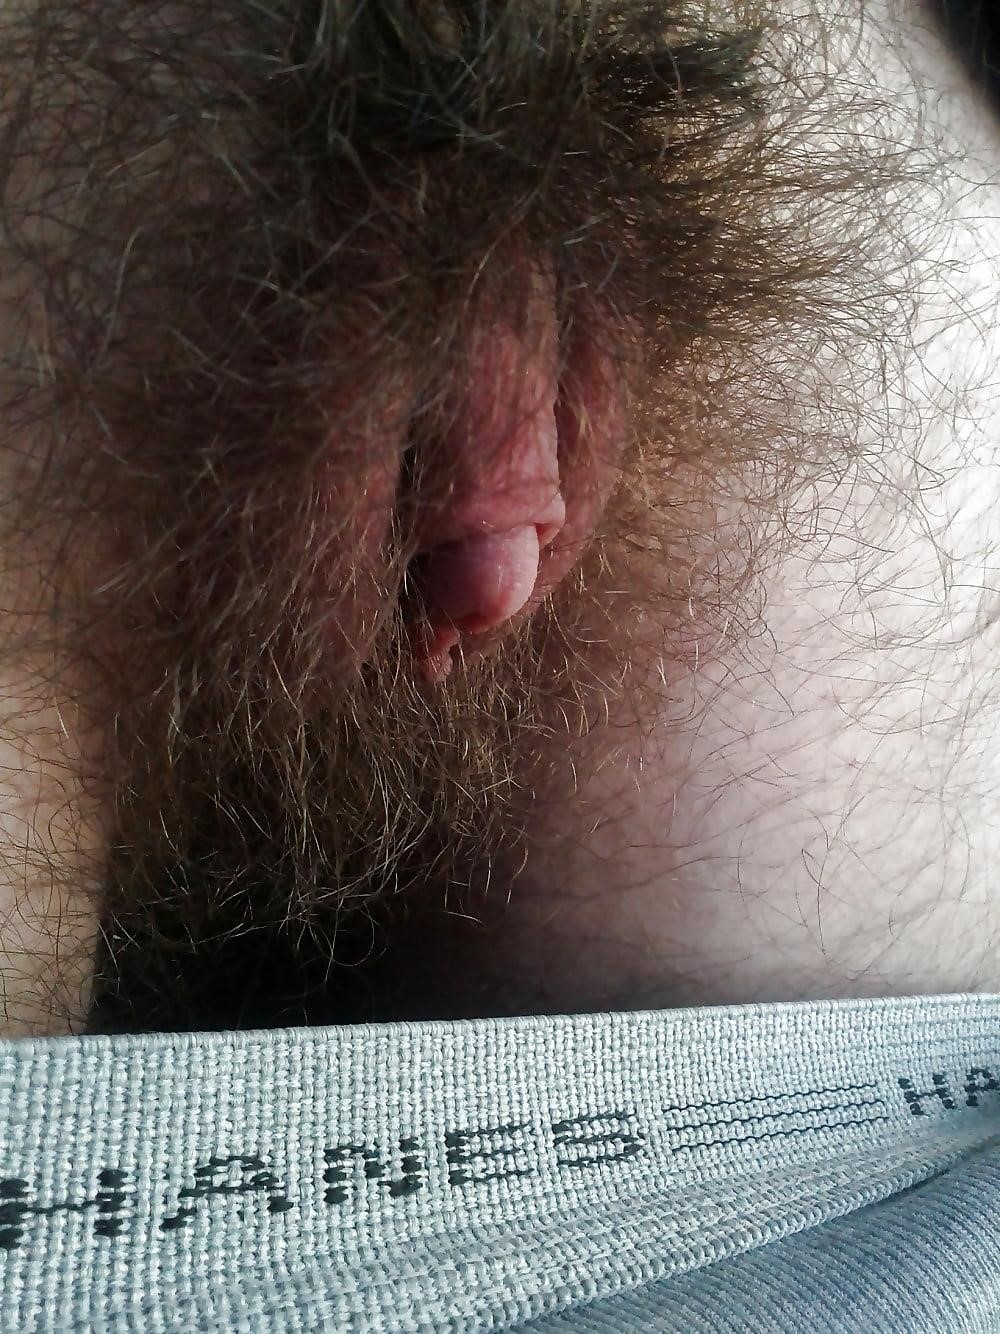 Porn large clitoris-1656